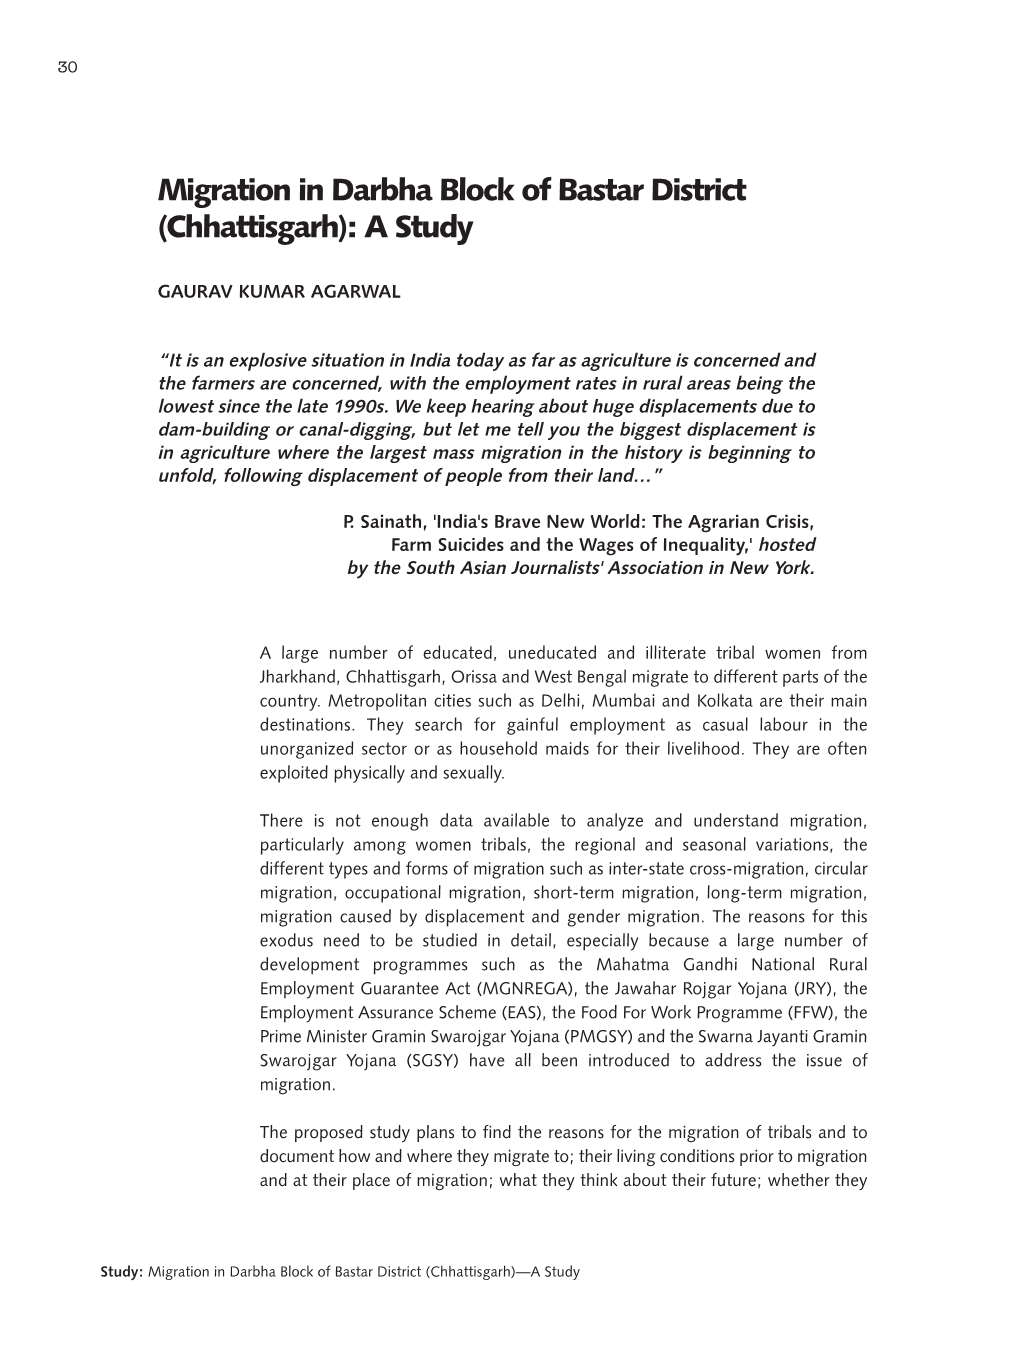 Migration in Darbha Block of Bastar District (Chhattisgarh): a Study